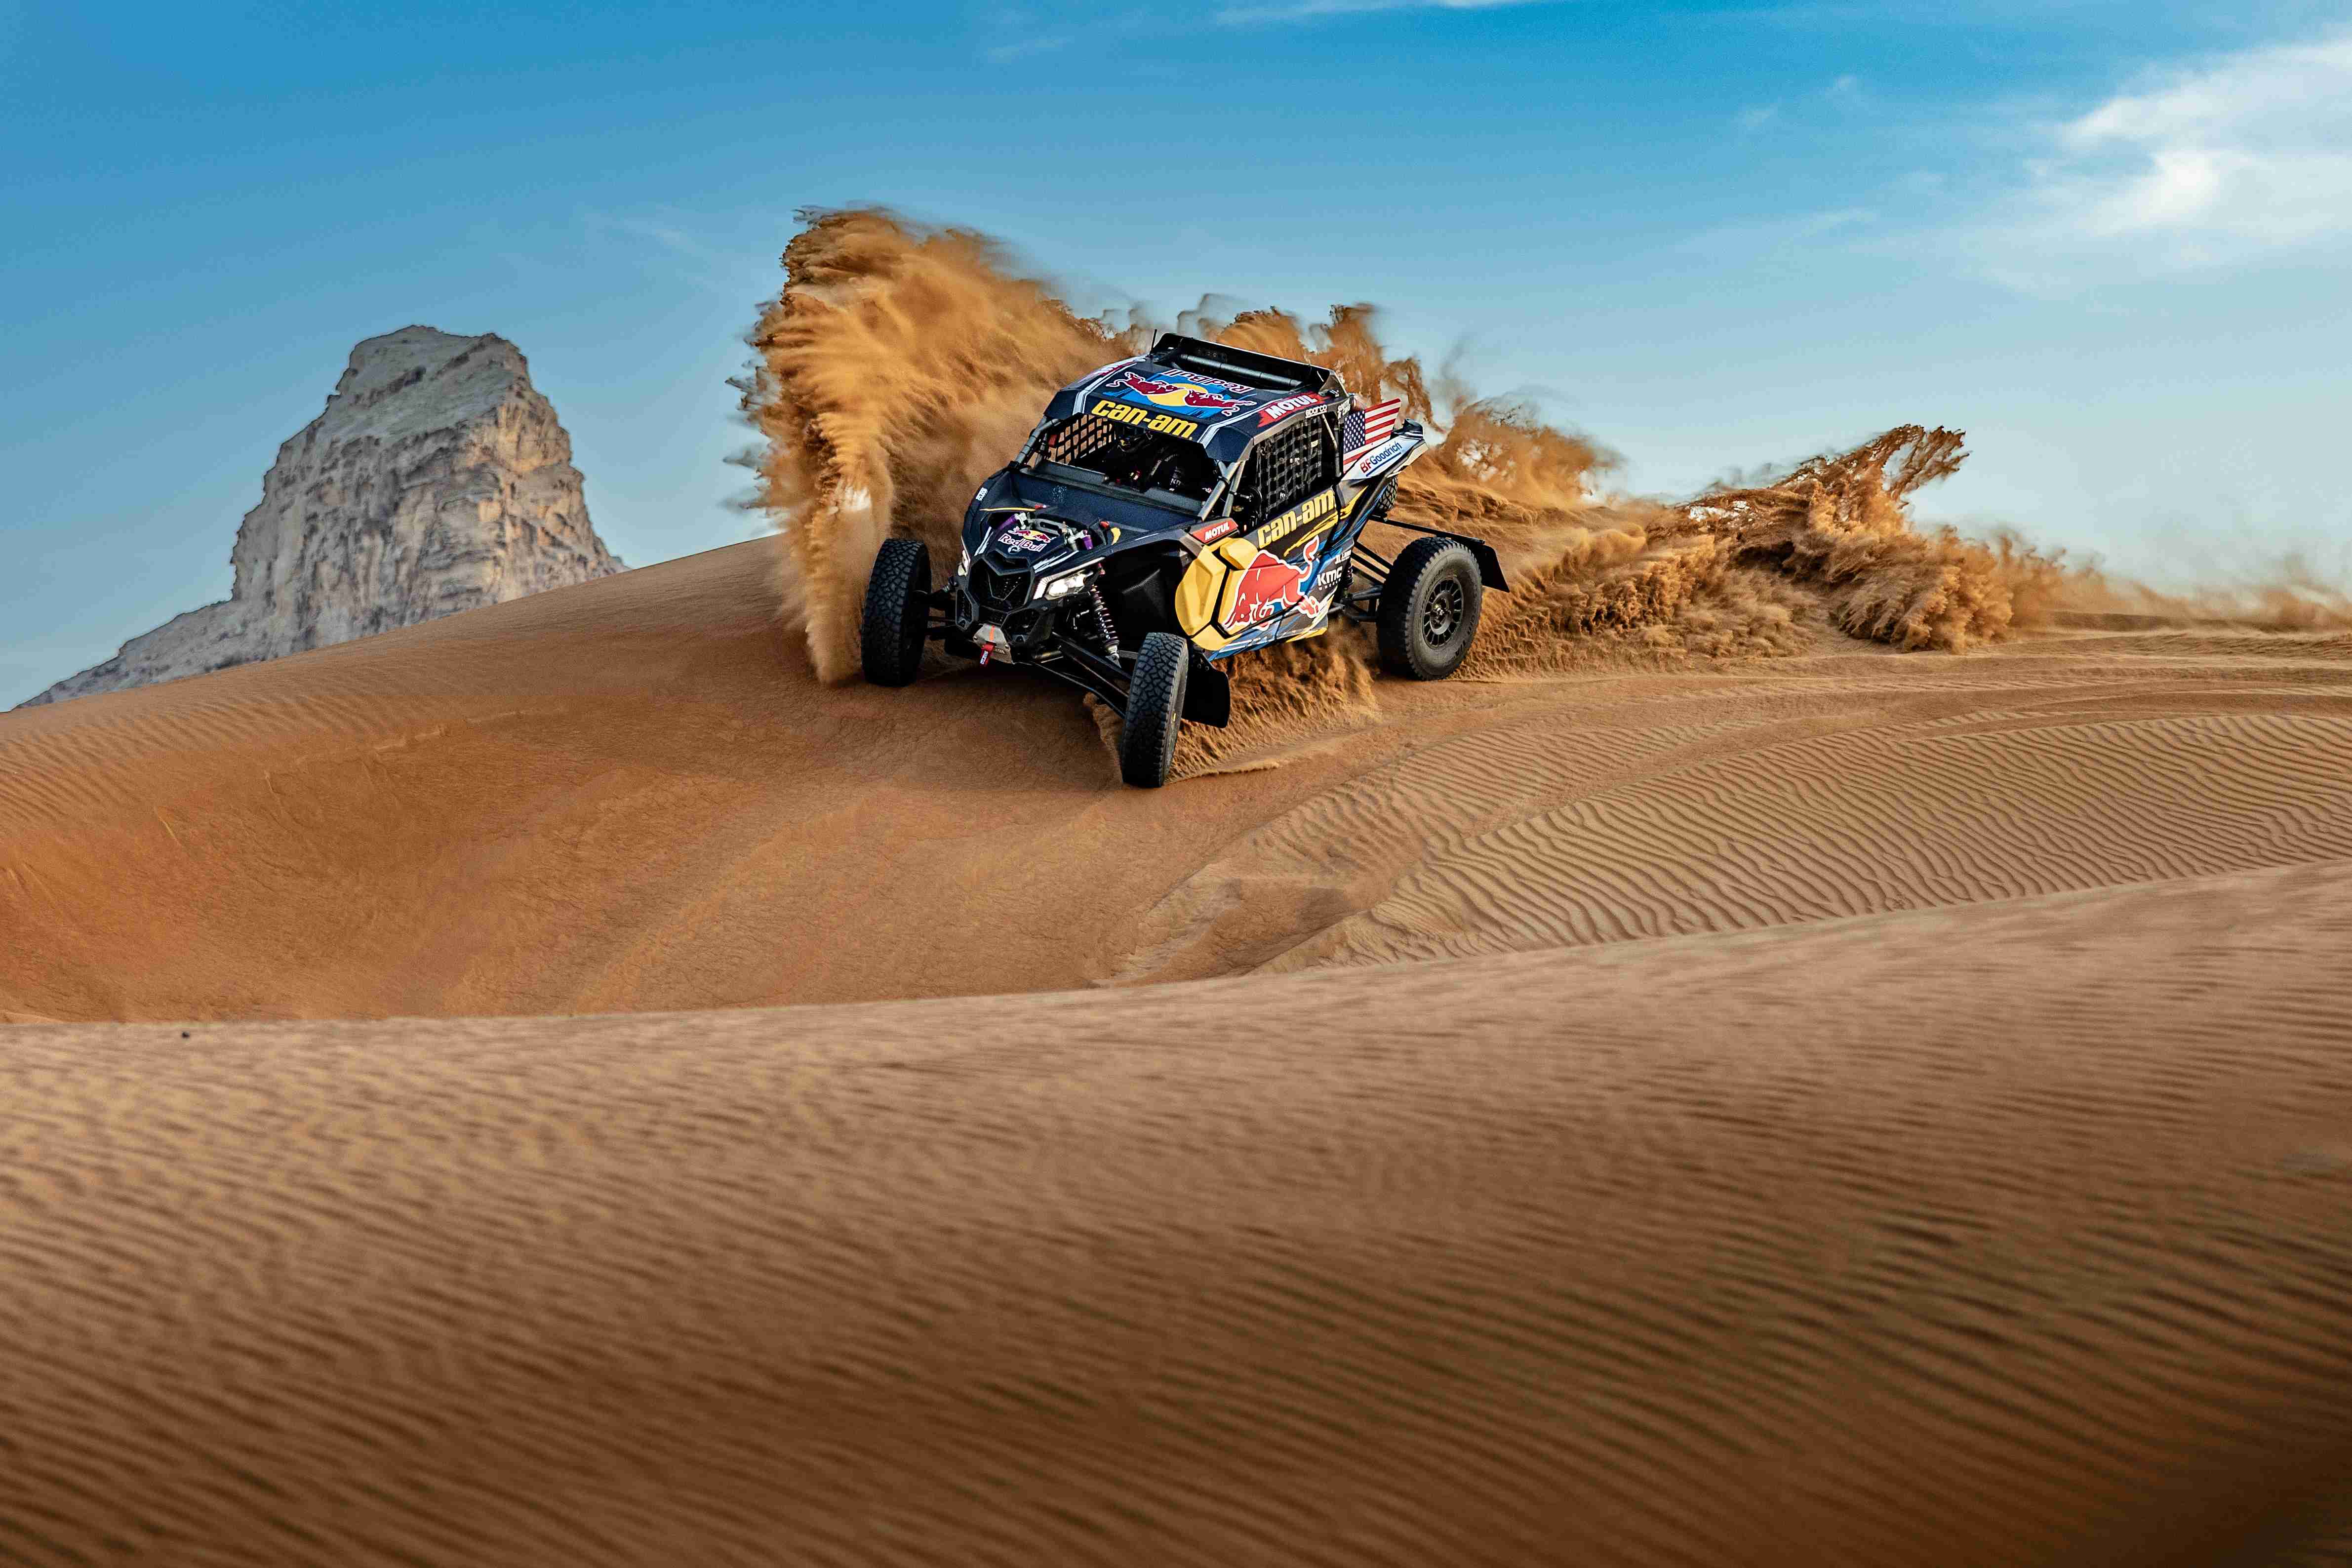 Can-Am Factory Racers Make History Winning Sixth Dakar Rally